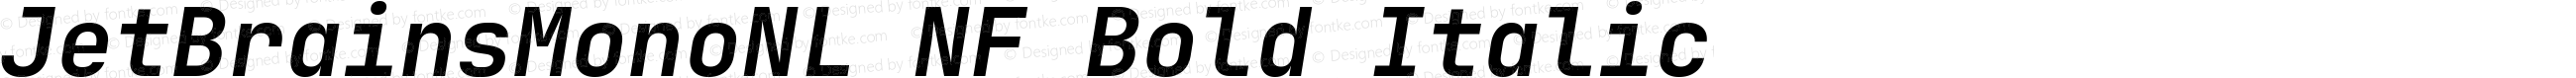 JetBrains Mono NL Bold Italic Nerd Font Complete Mono Windows Compatible